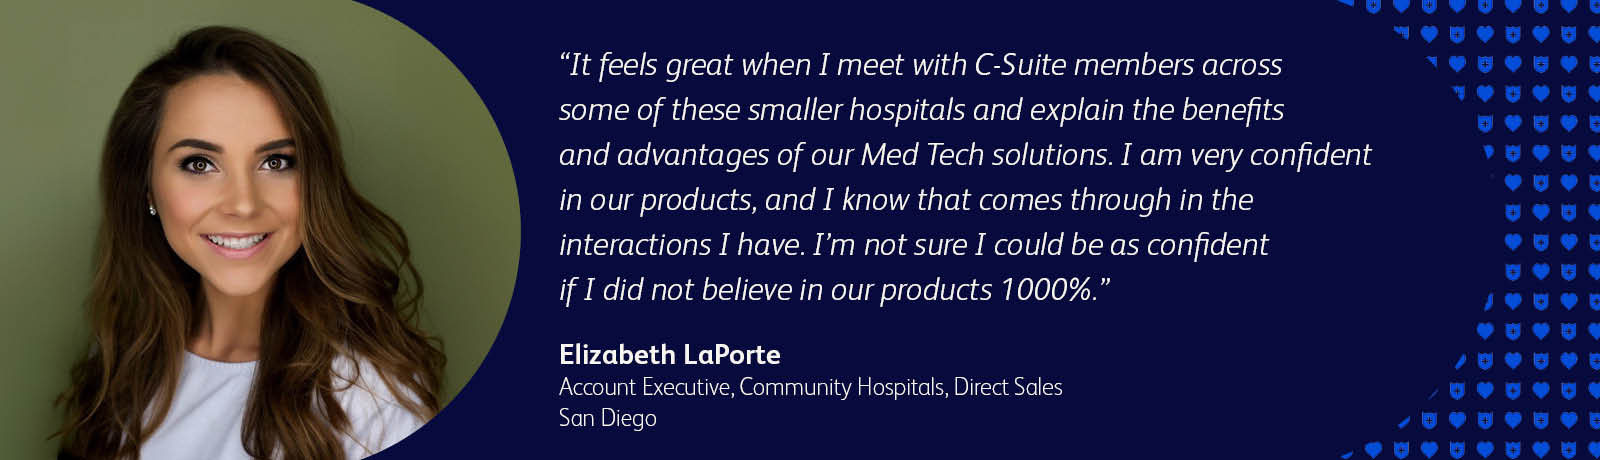 Elizabeth LaPorte, Account Executive, Community Hospital in Direct Sales at BD